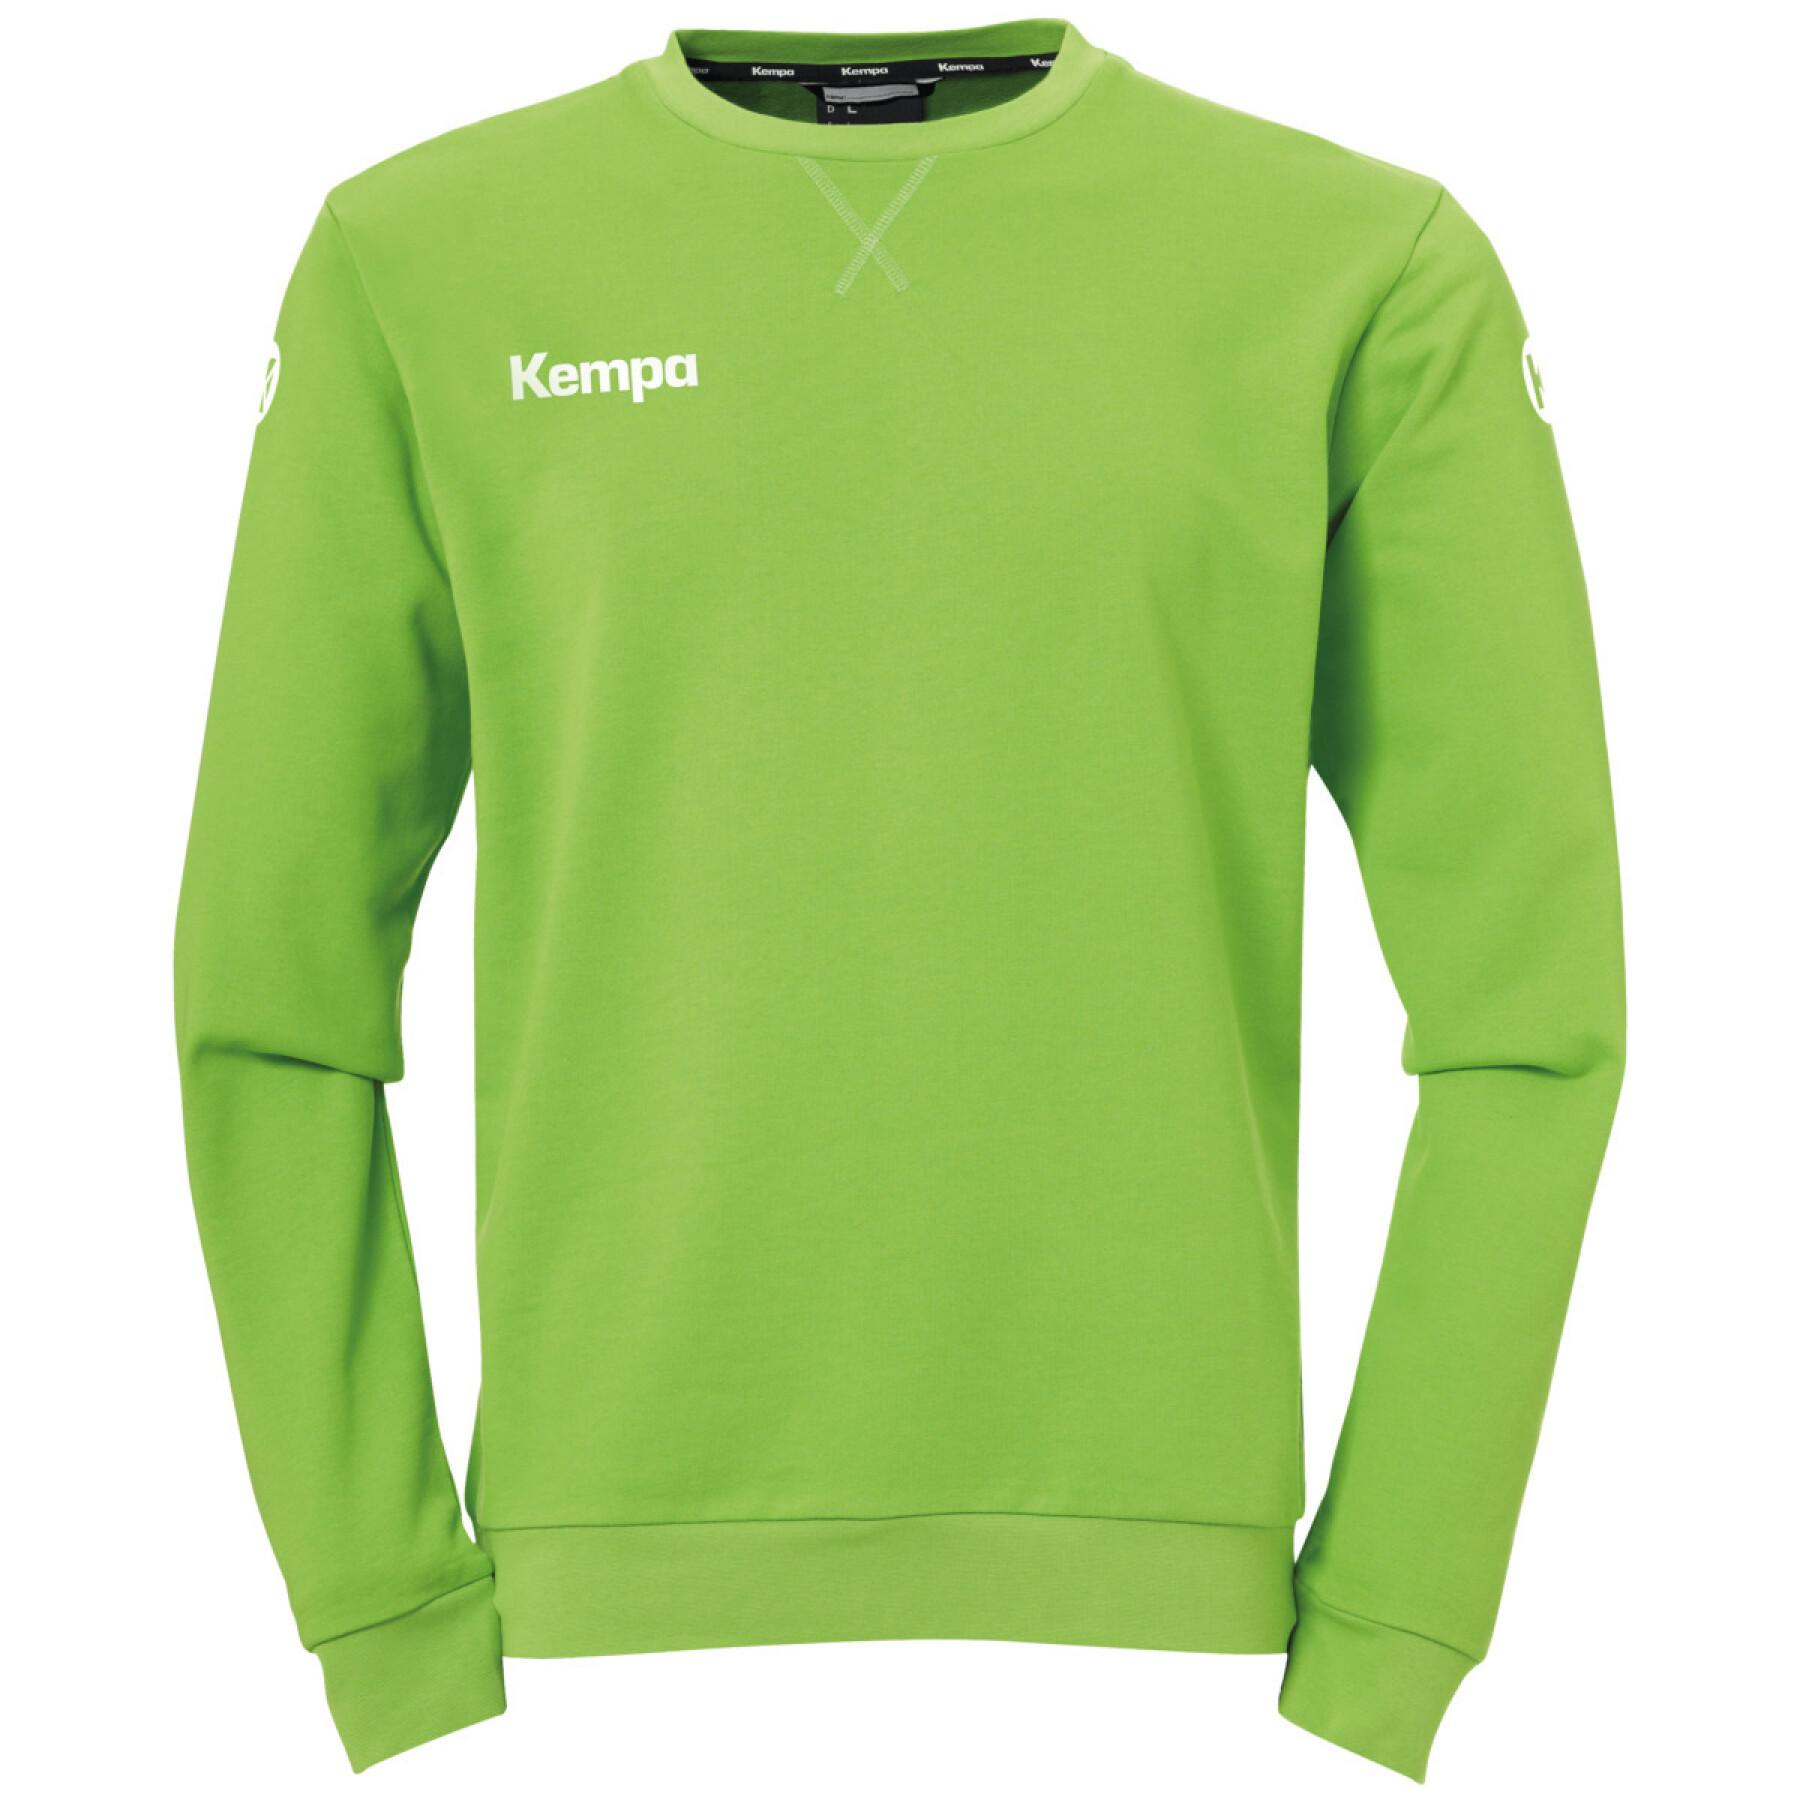 Kinder sweatshirt Kempa Training Top